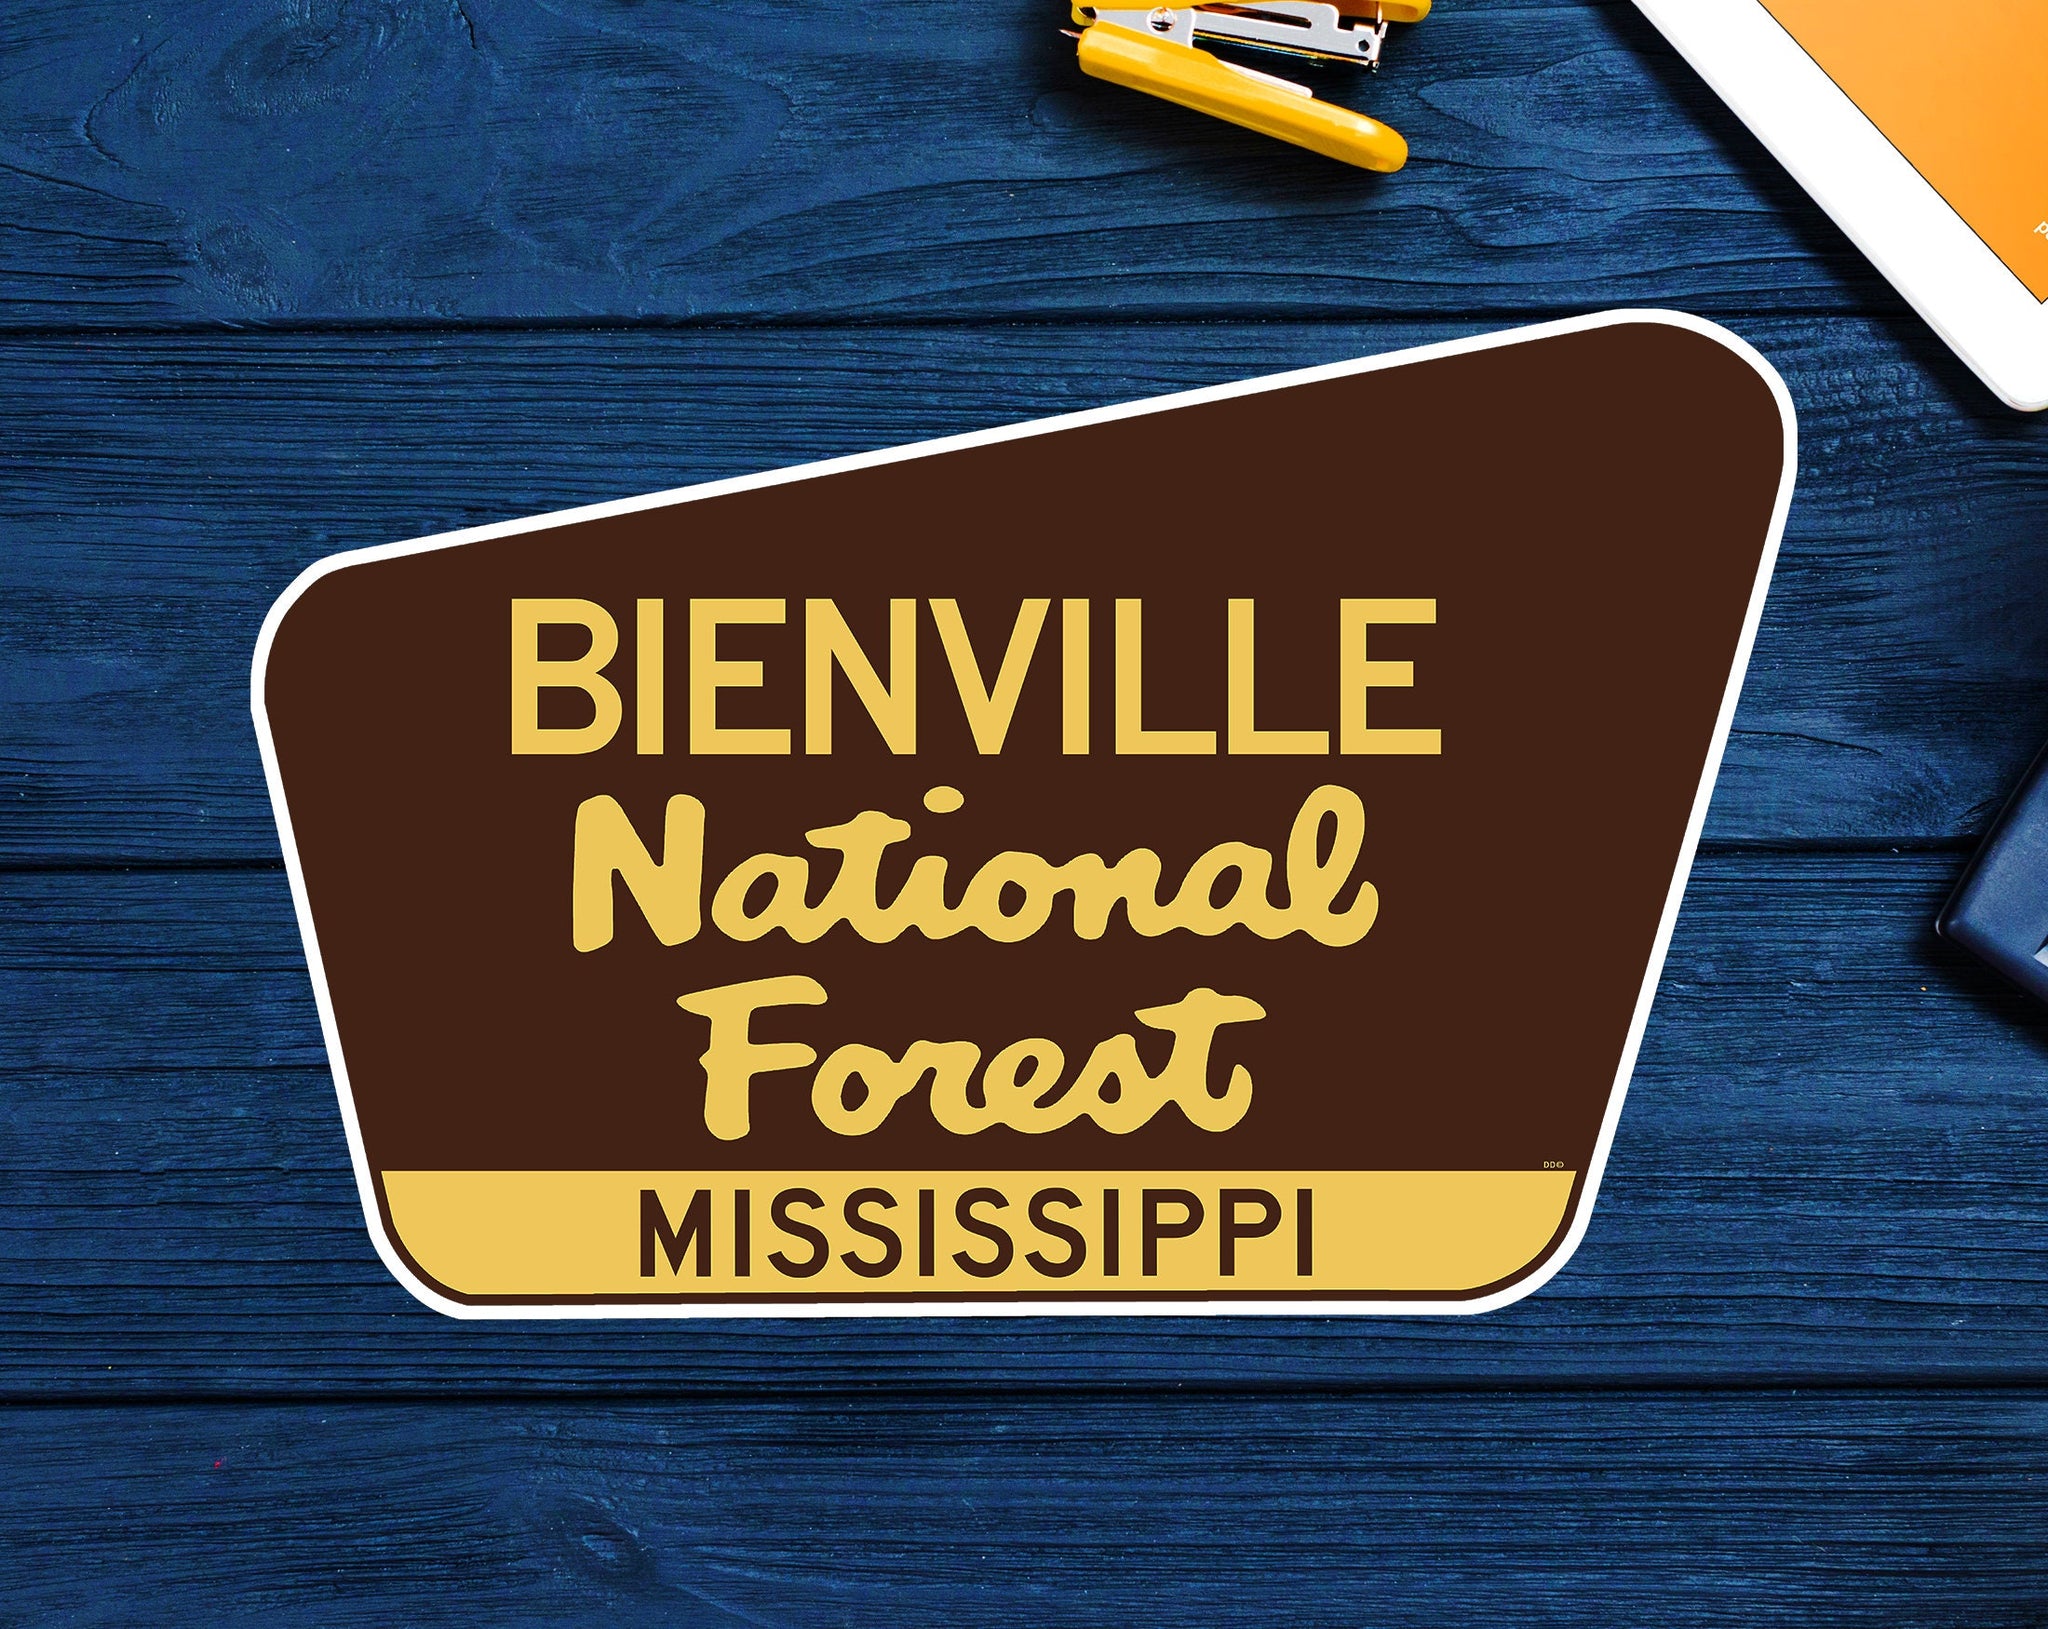 Bienville National Forest Decal Sticker 3.75" x 2.5" Mississippi Vinyl MS